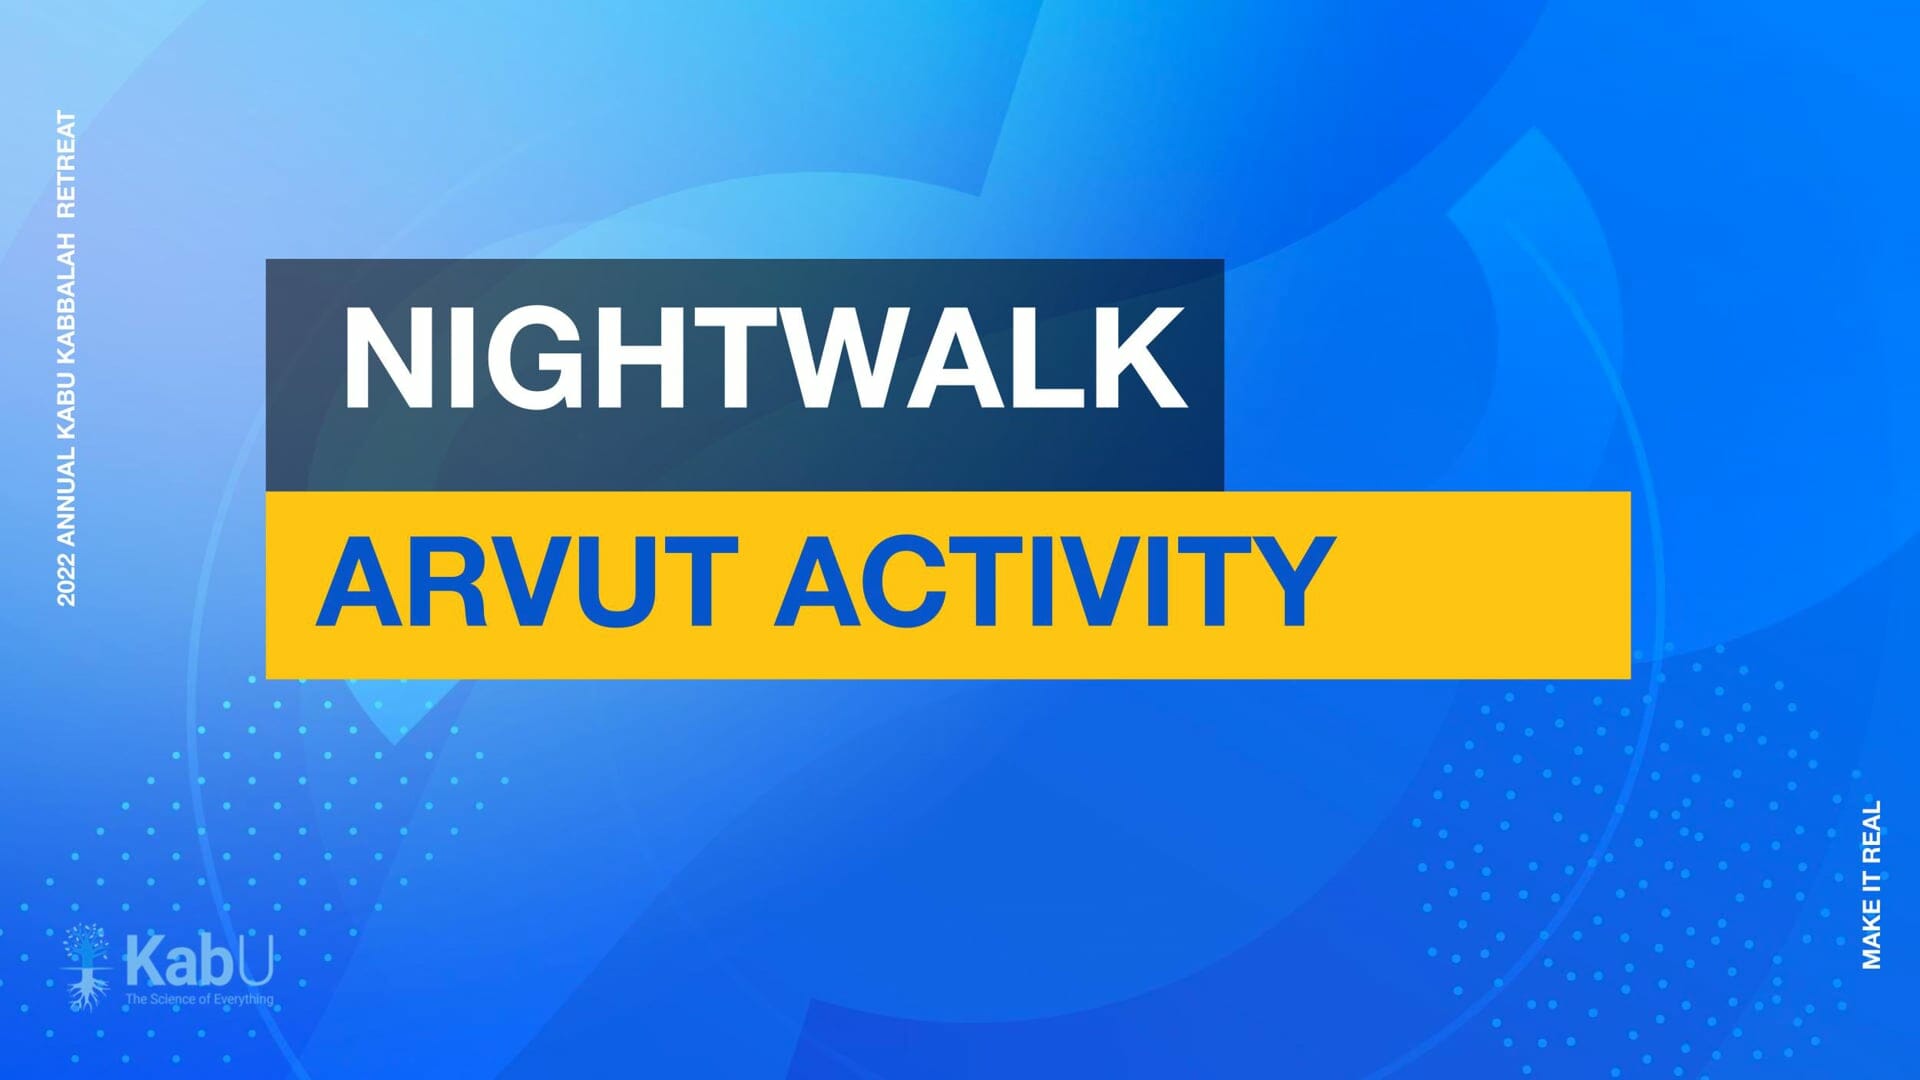 Sept 9, 2022 – Night walk – Arvut activity